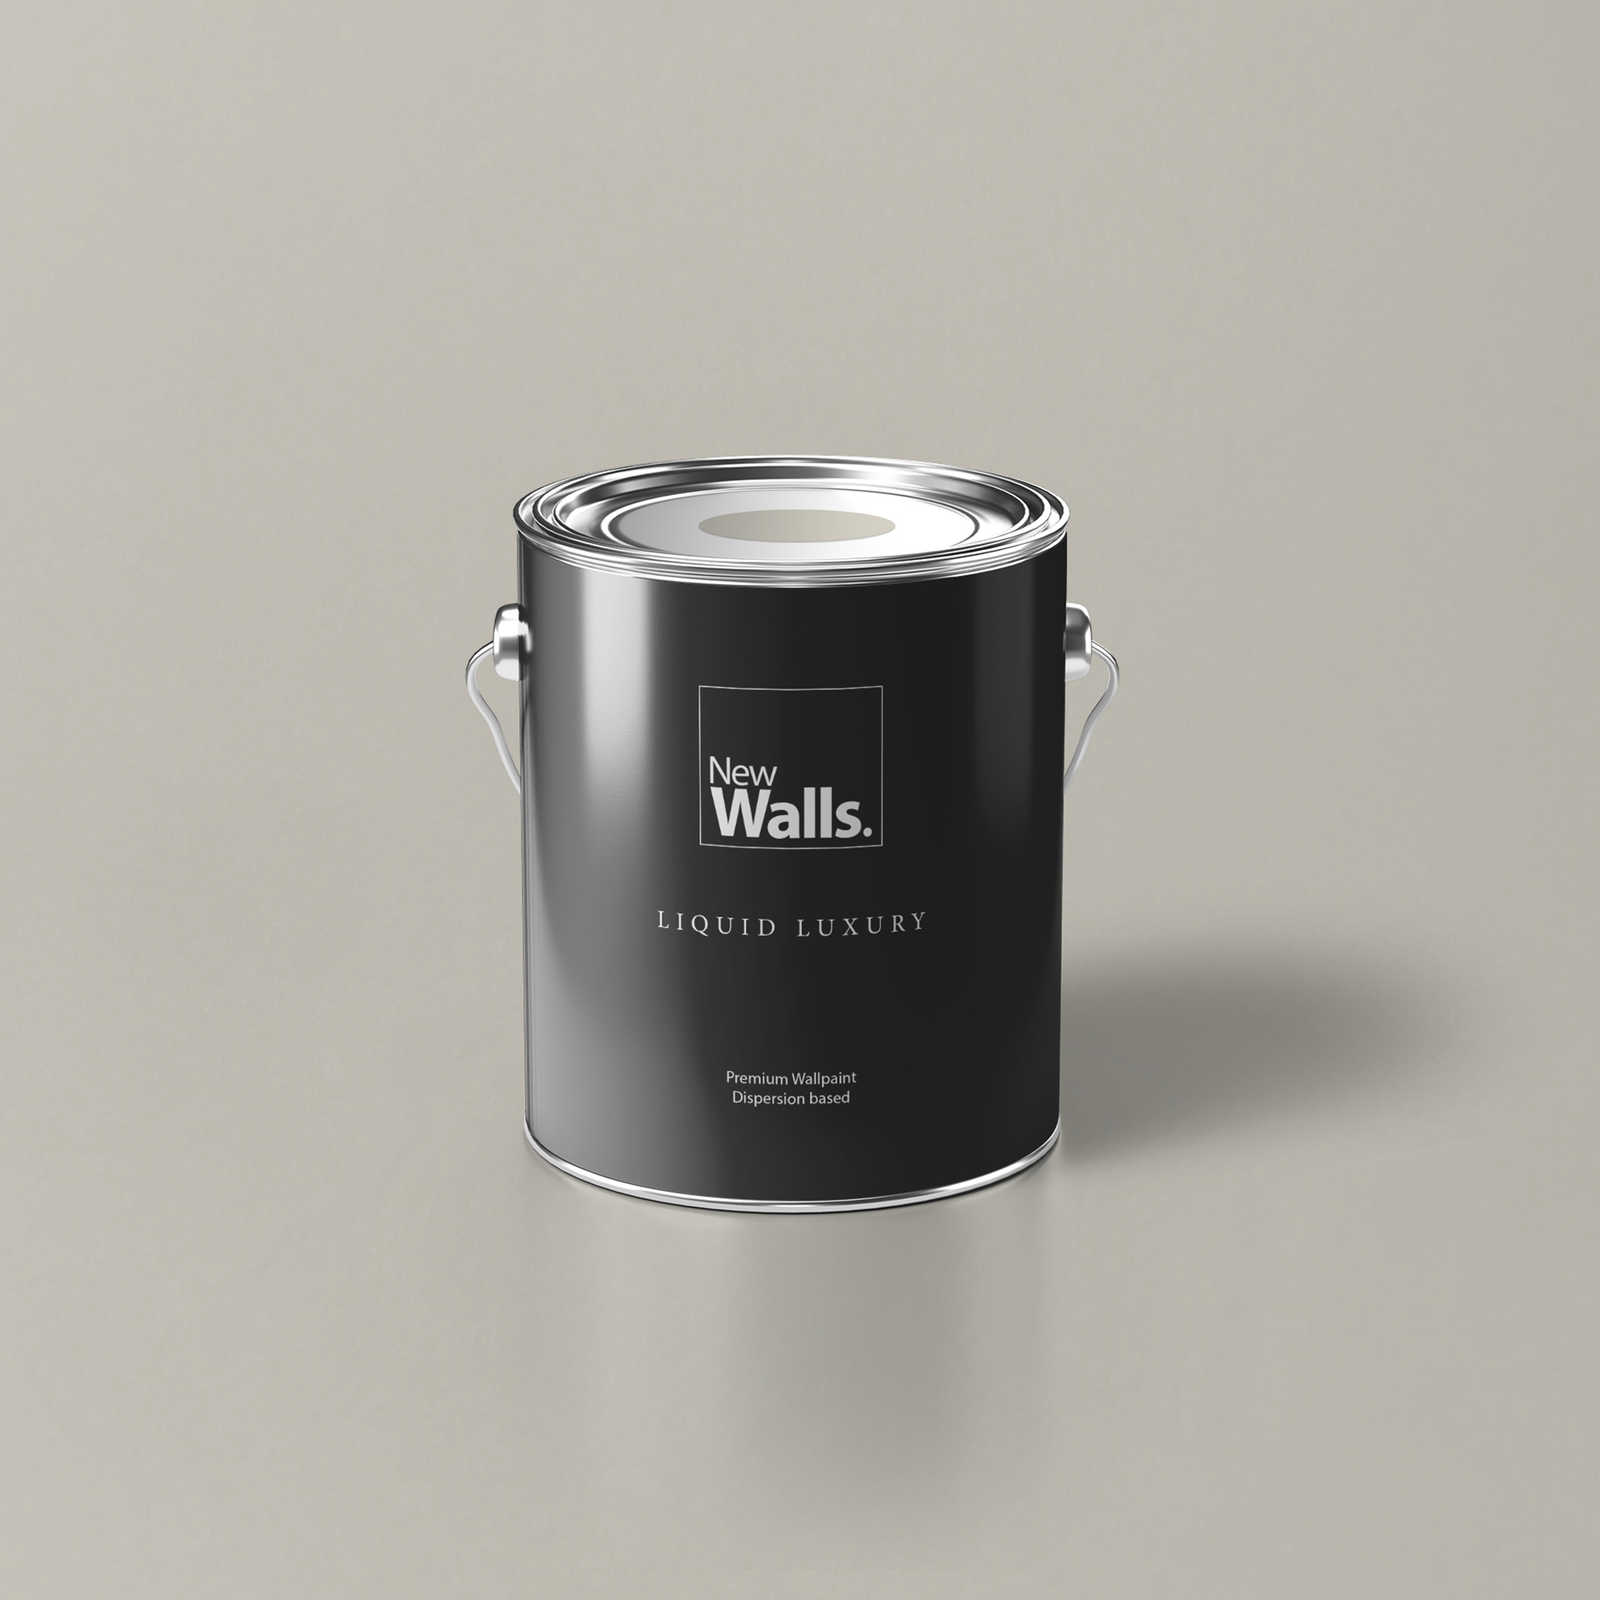 Premium Wall Paint Neutral Khaki »Talented calm taupe« NW703 – 2.5 litre
